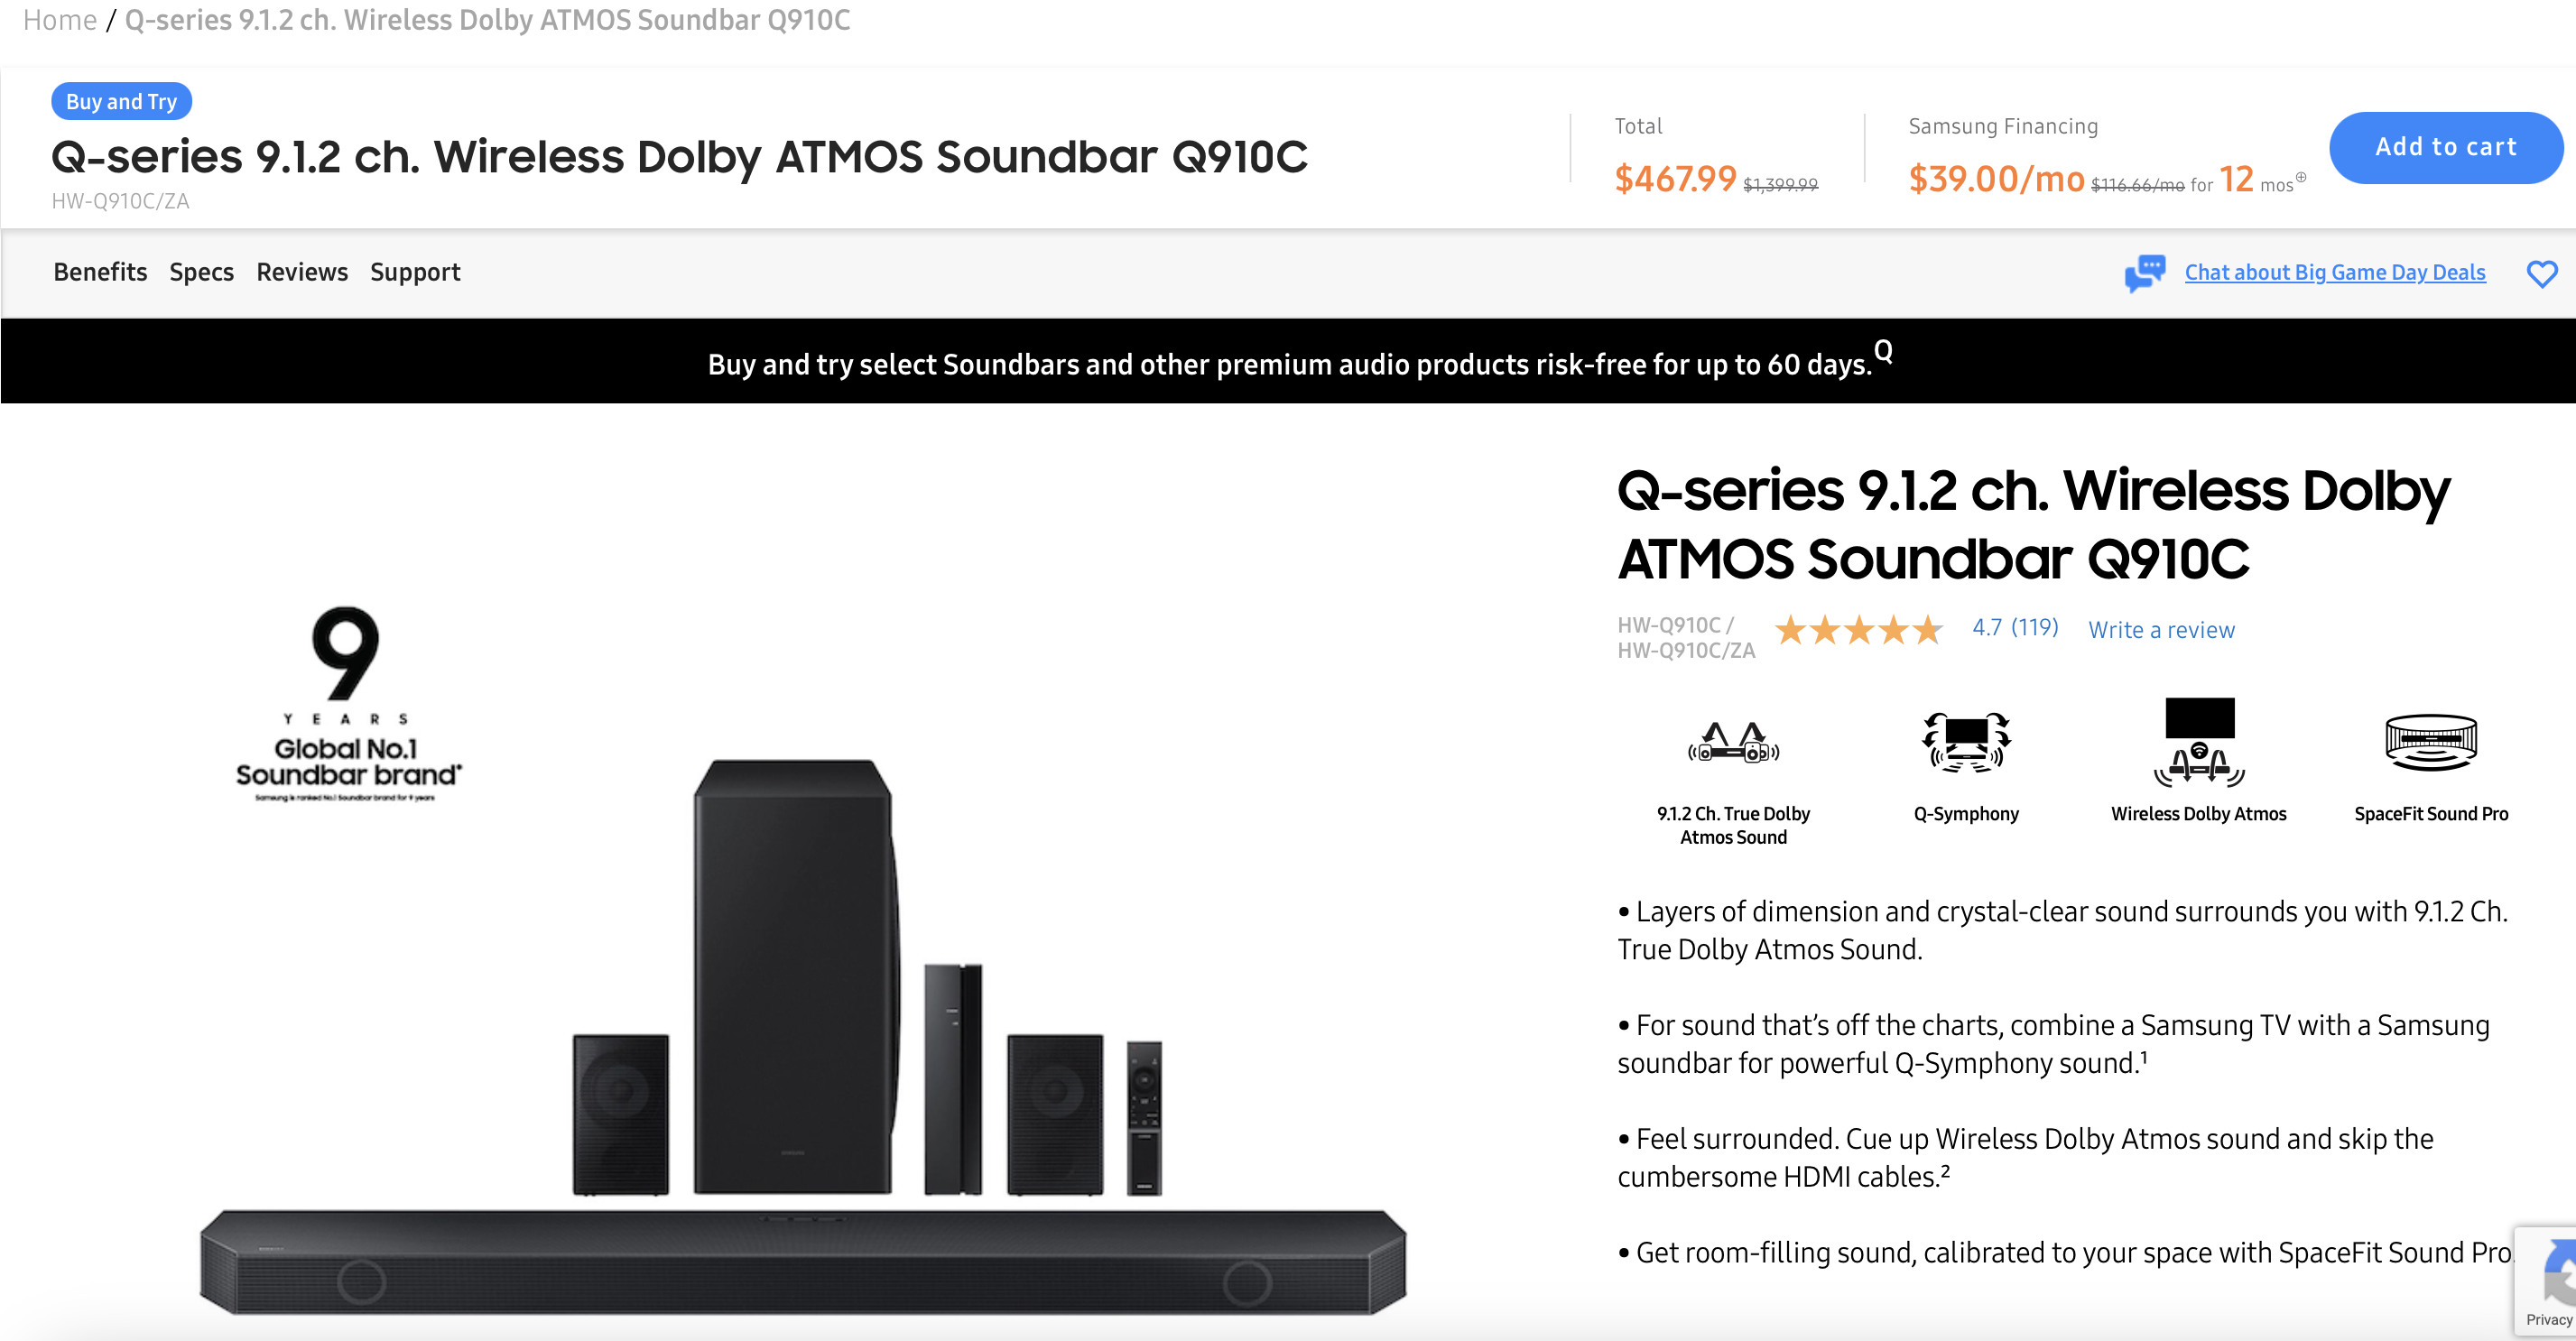 Samsung EPP Members: Q-series 9.1.2 ch. Wireless Dolby ATMOS Soundbar Q910C $467.99